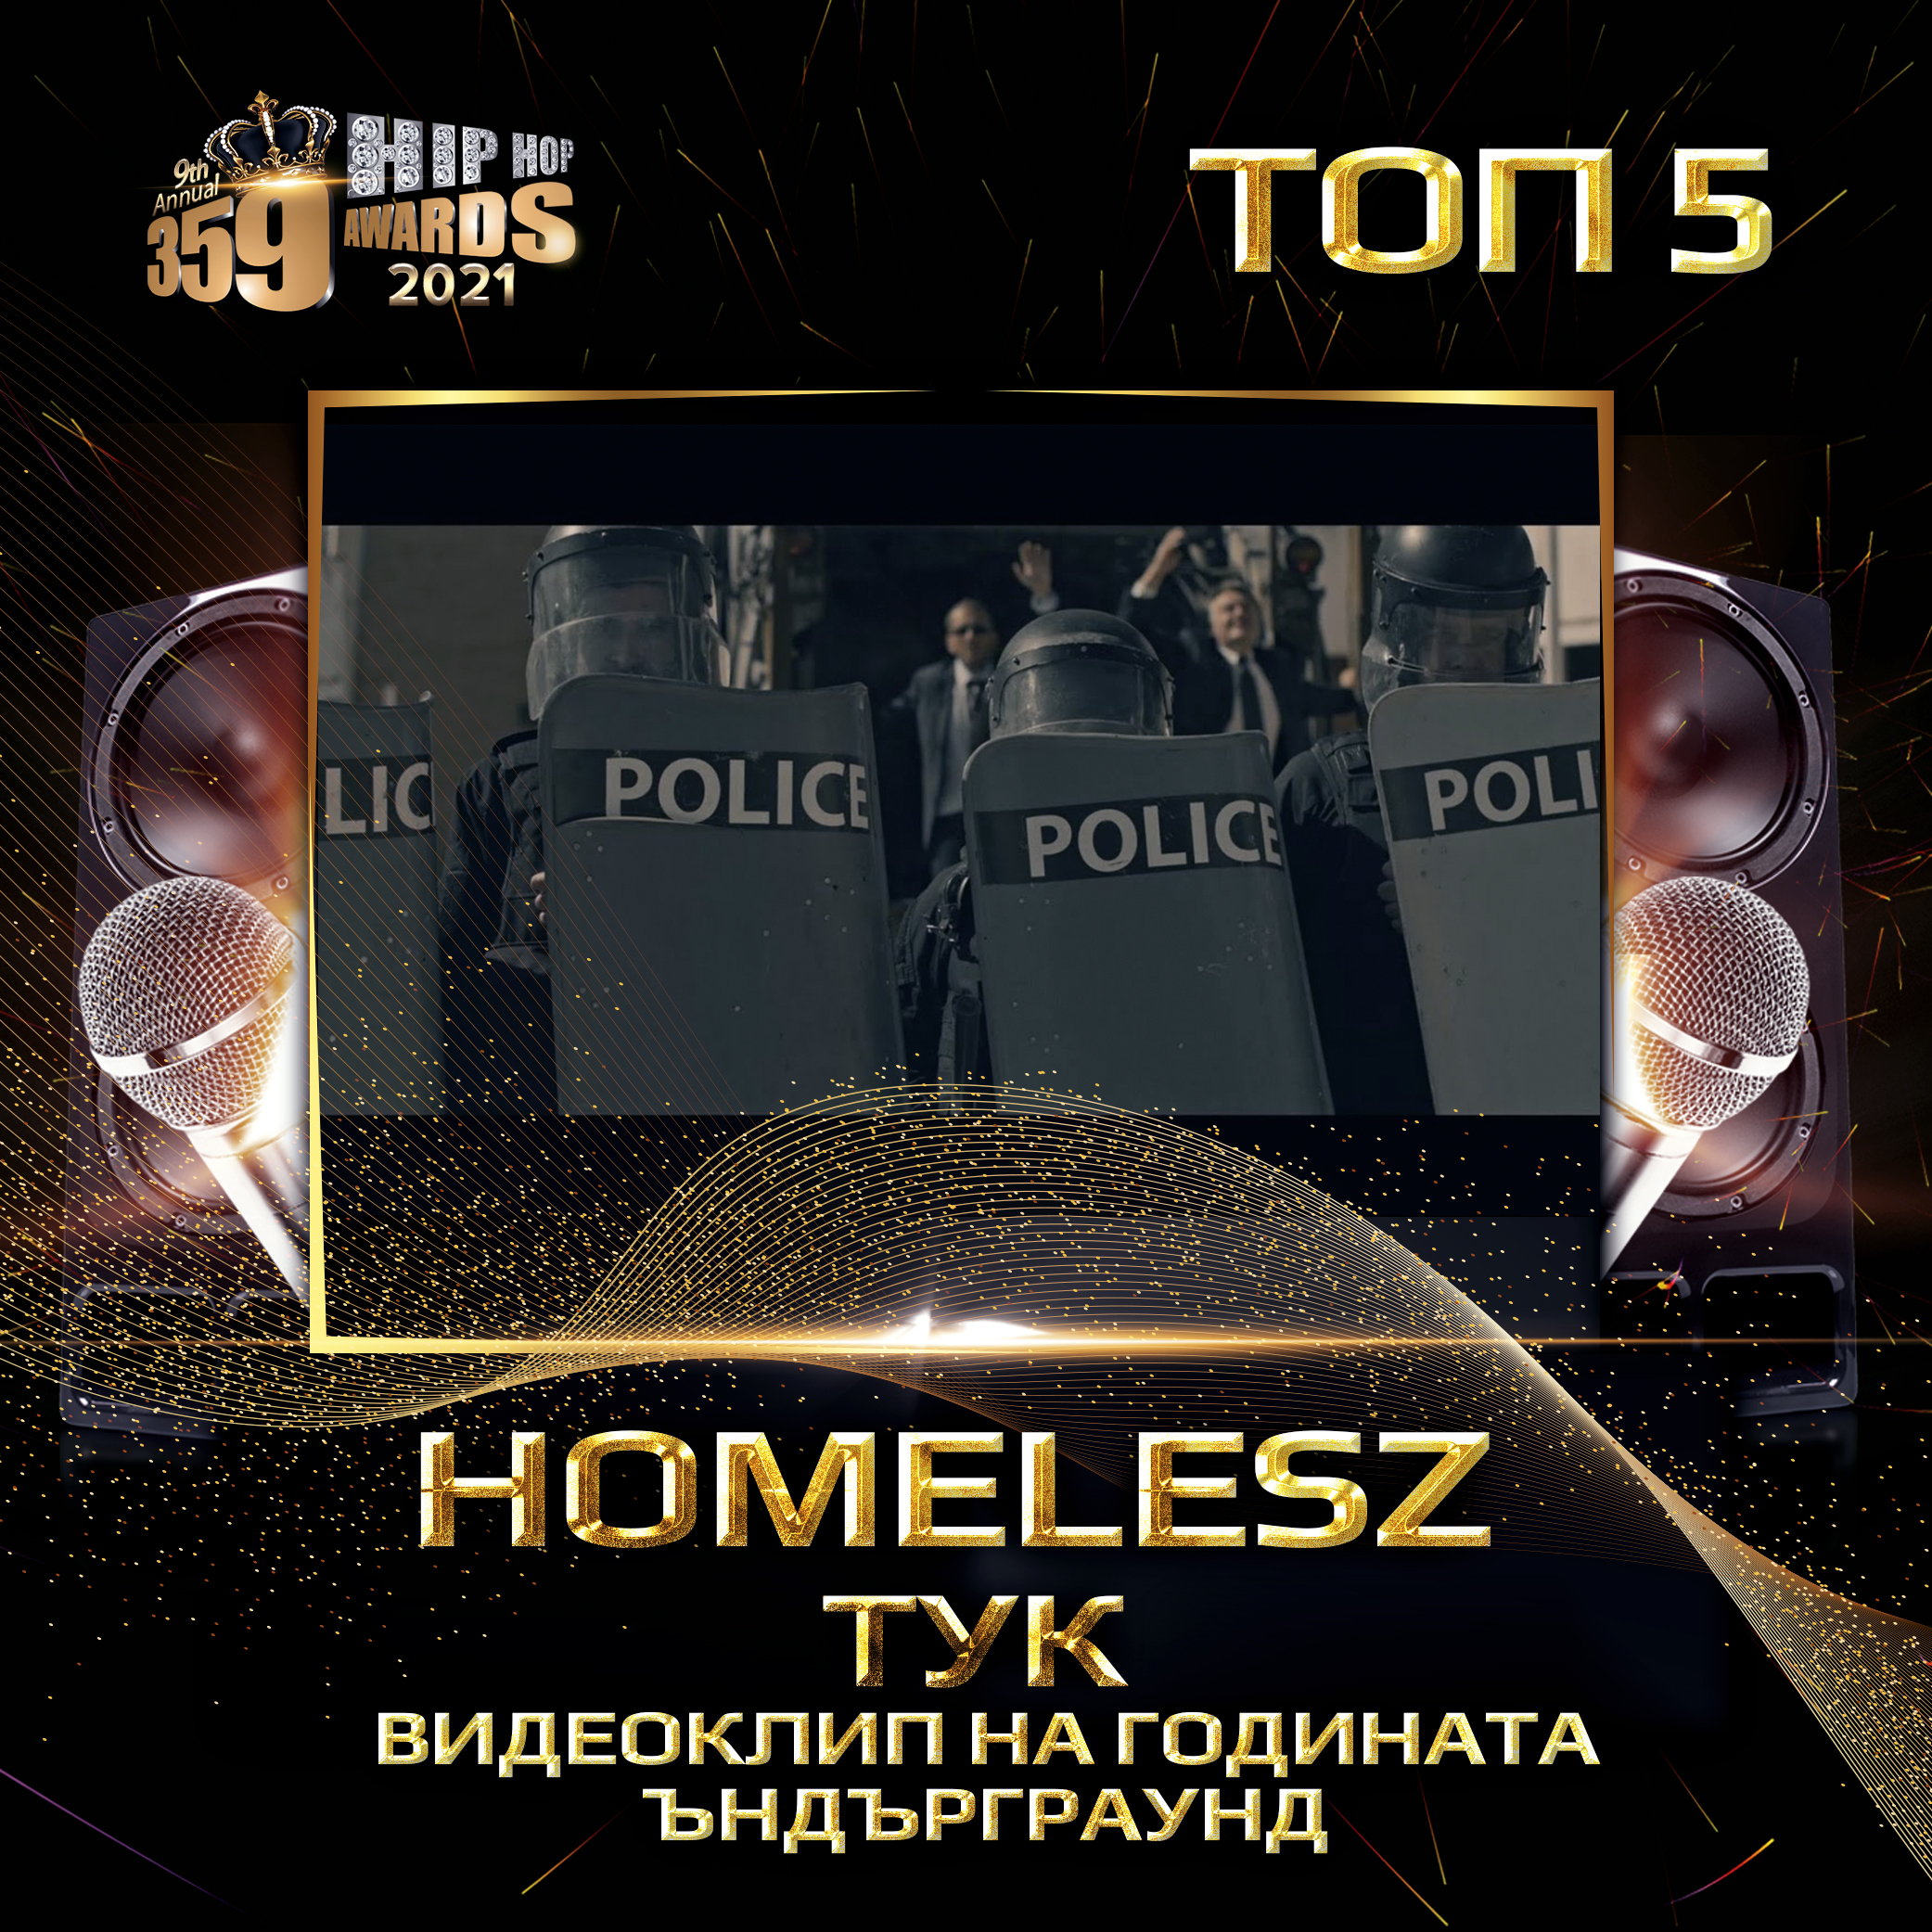 top 5  359 awards 2021 clip underground homelesz tuk - Най-добър видеоклип ъндърграунд 2020